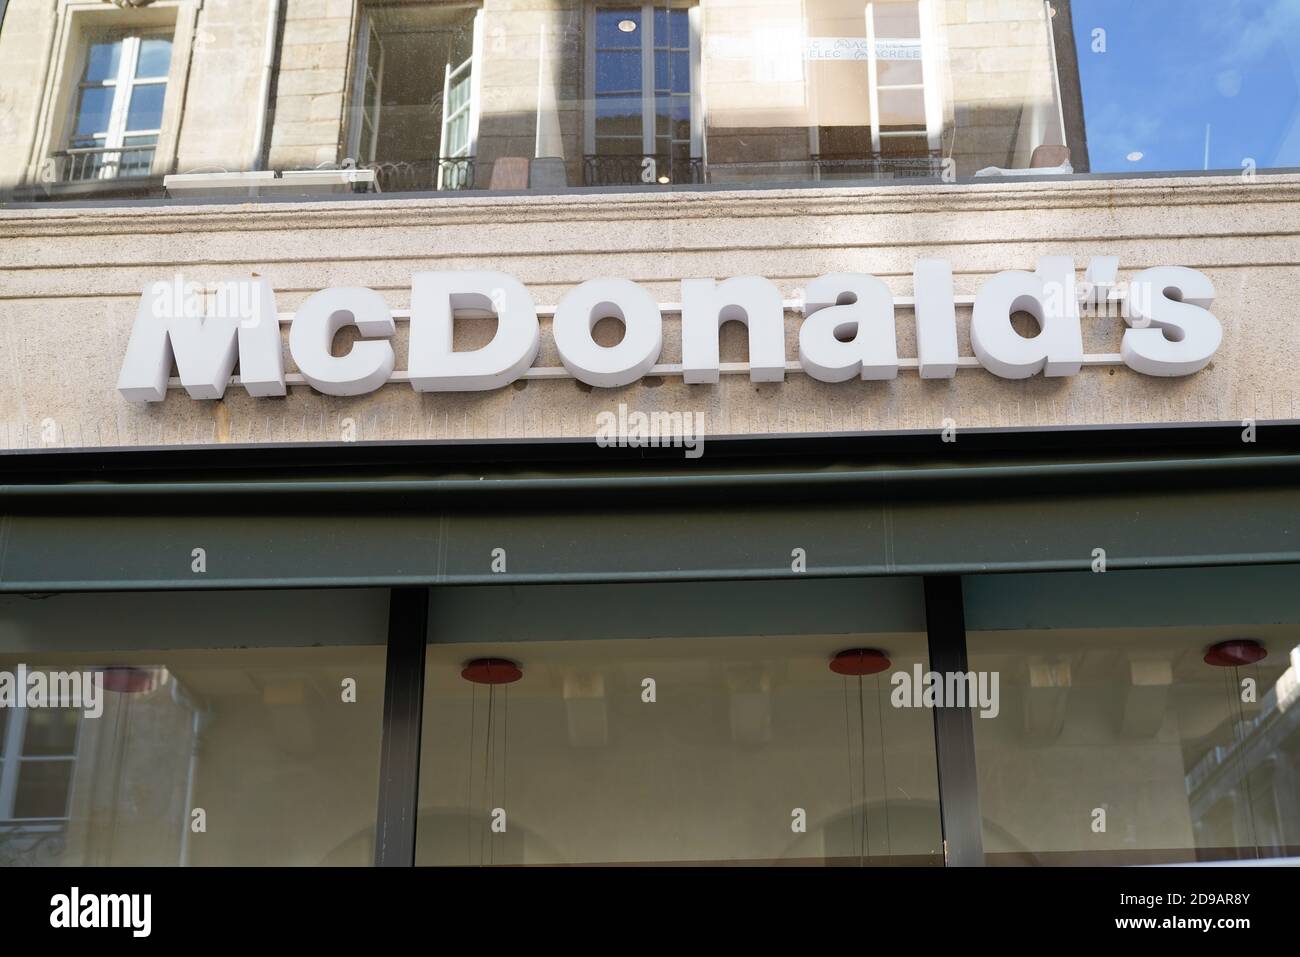 Bordeaux , Aquitaine / France - 11 01 2020 : mc donald logo and text sign of fastfood restaurant Mc Donalds Stock Photo